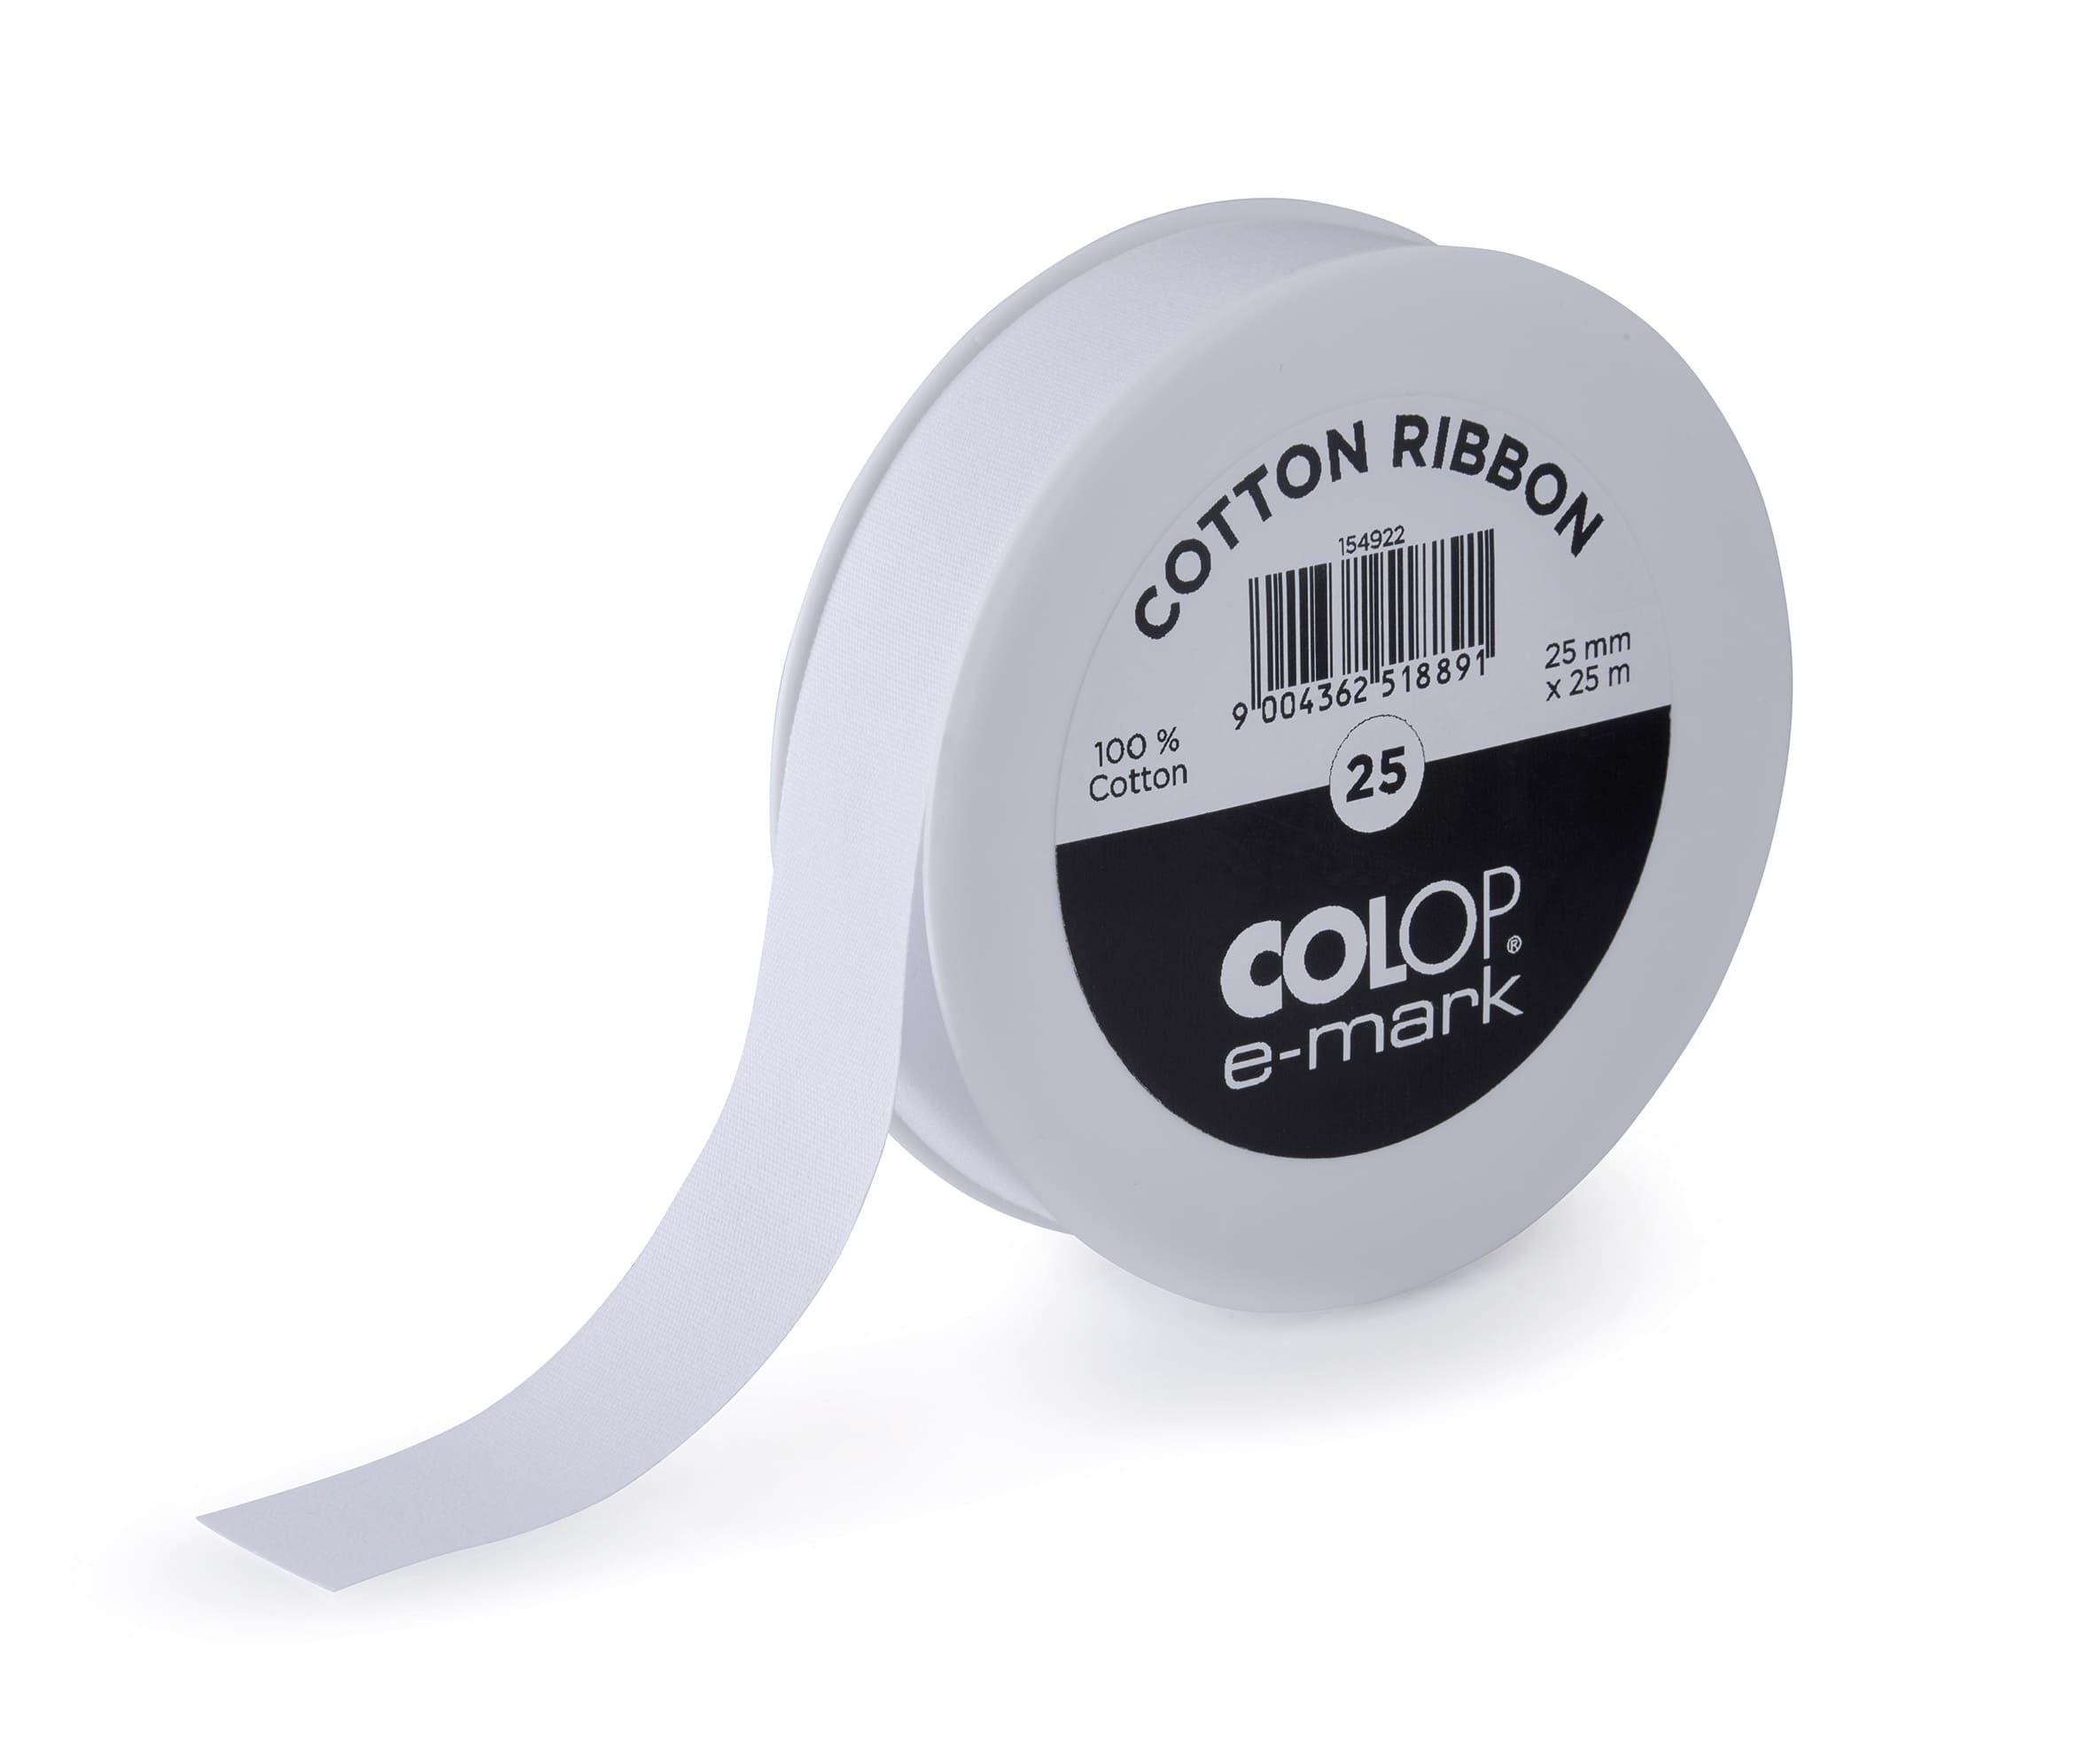 COLOP Ruban de coton 25mmx25m 154922 pour e-mark, blanc pour e-mark, blanc